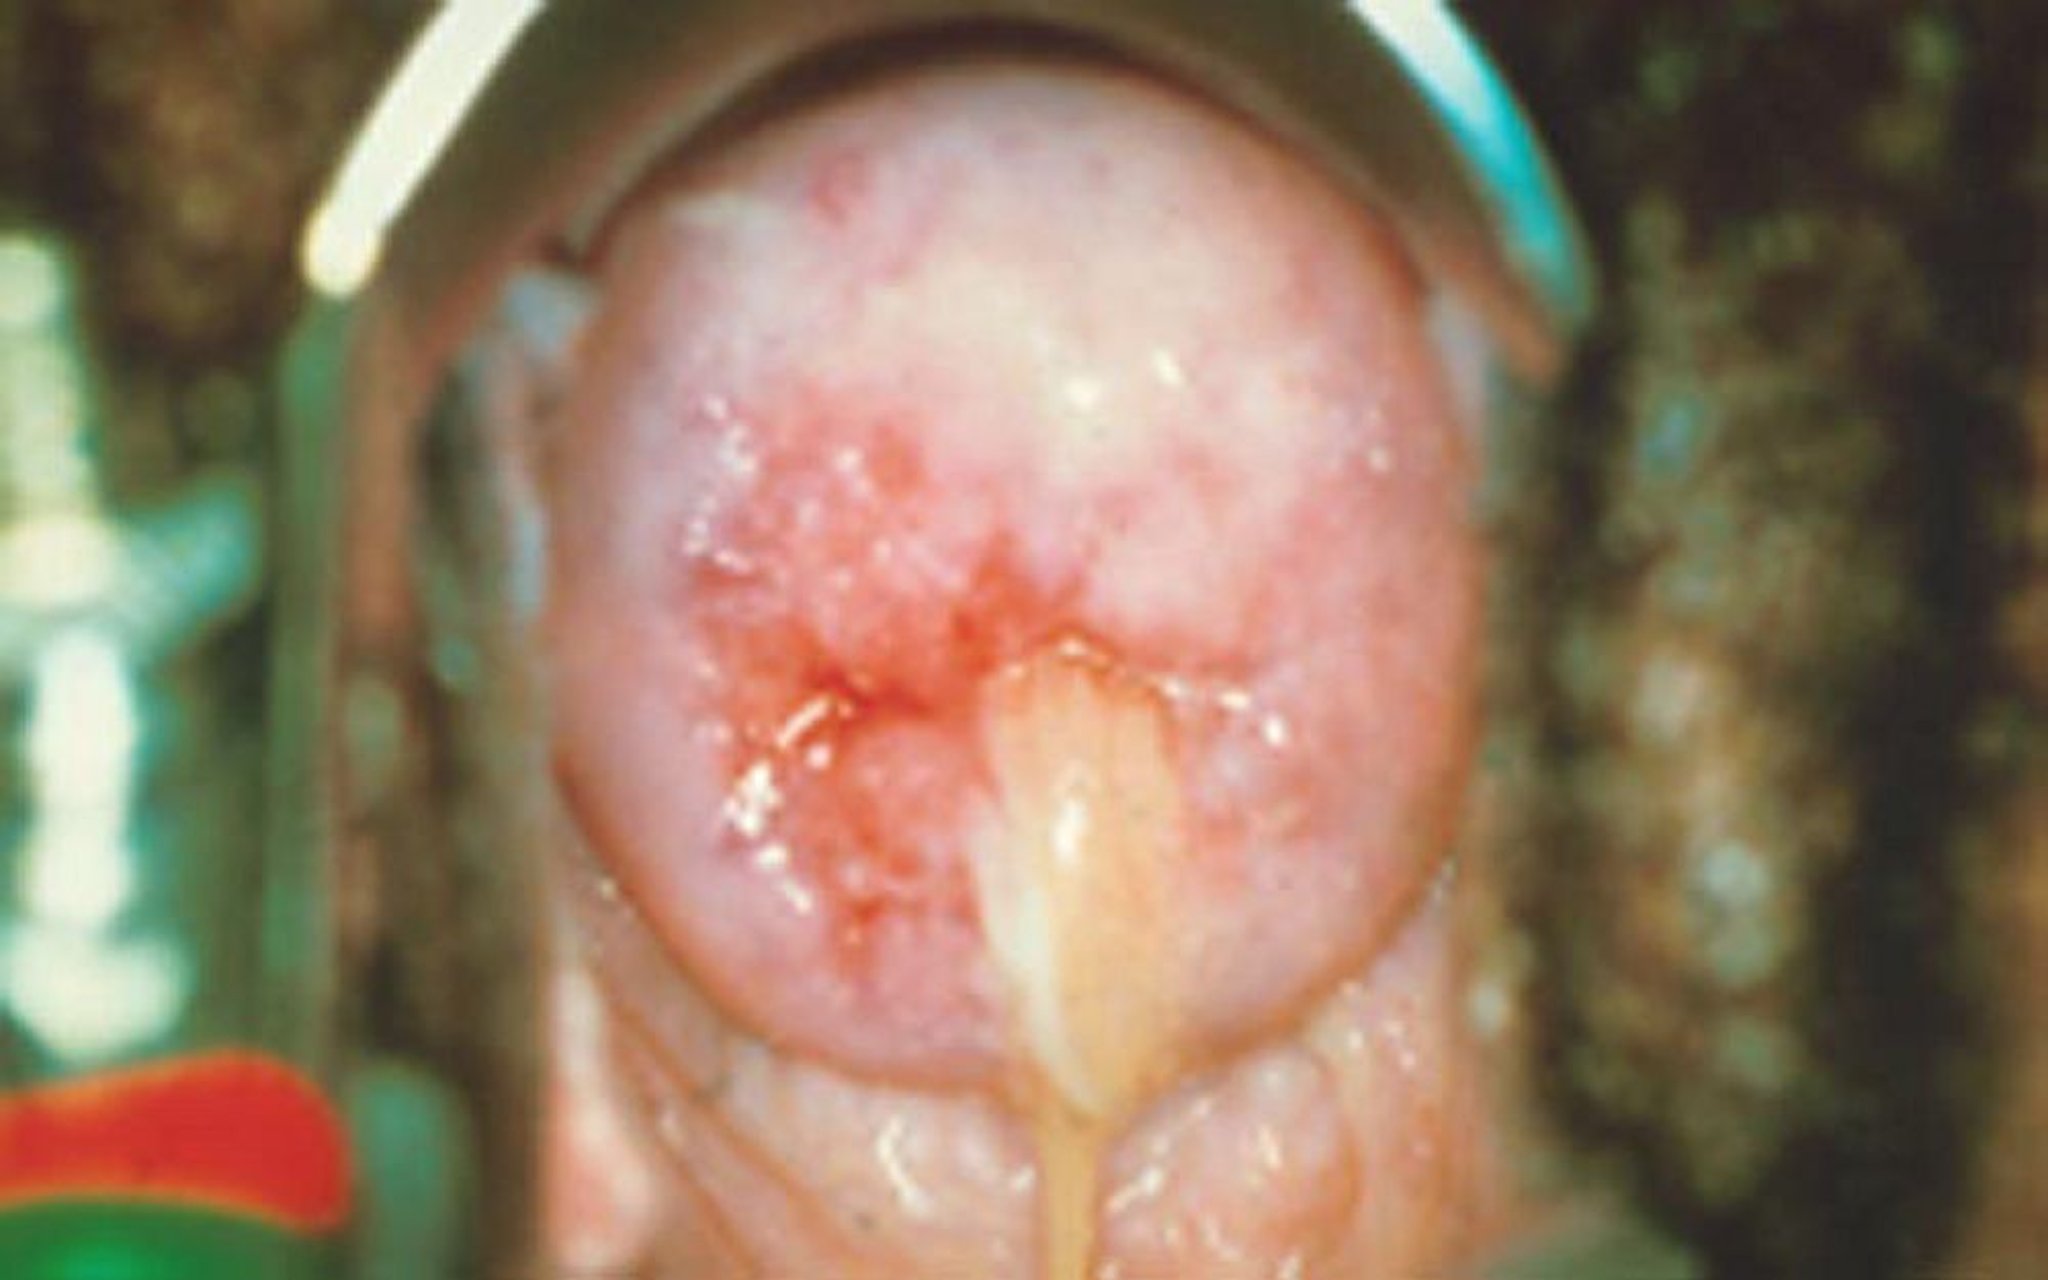 Mukopurulente Zervizitis